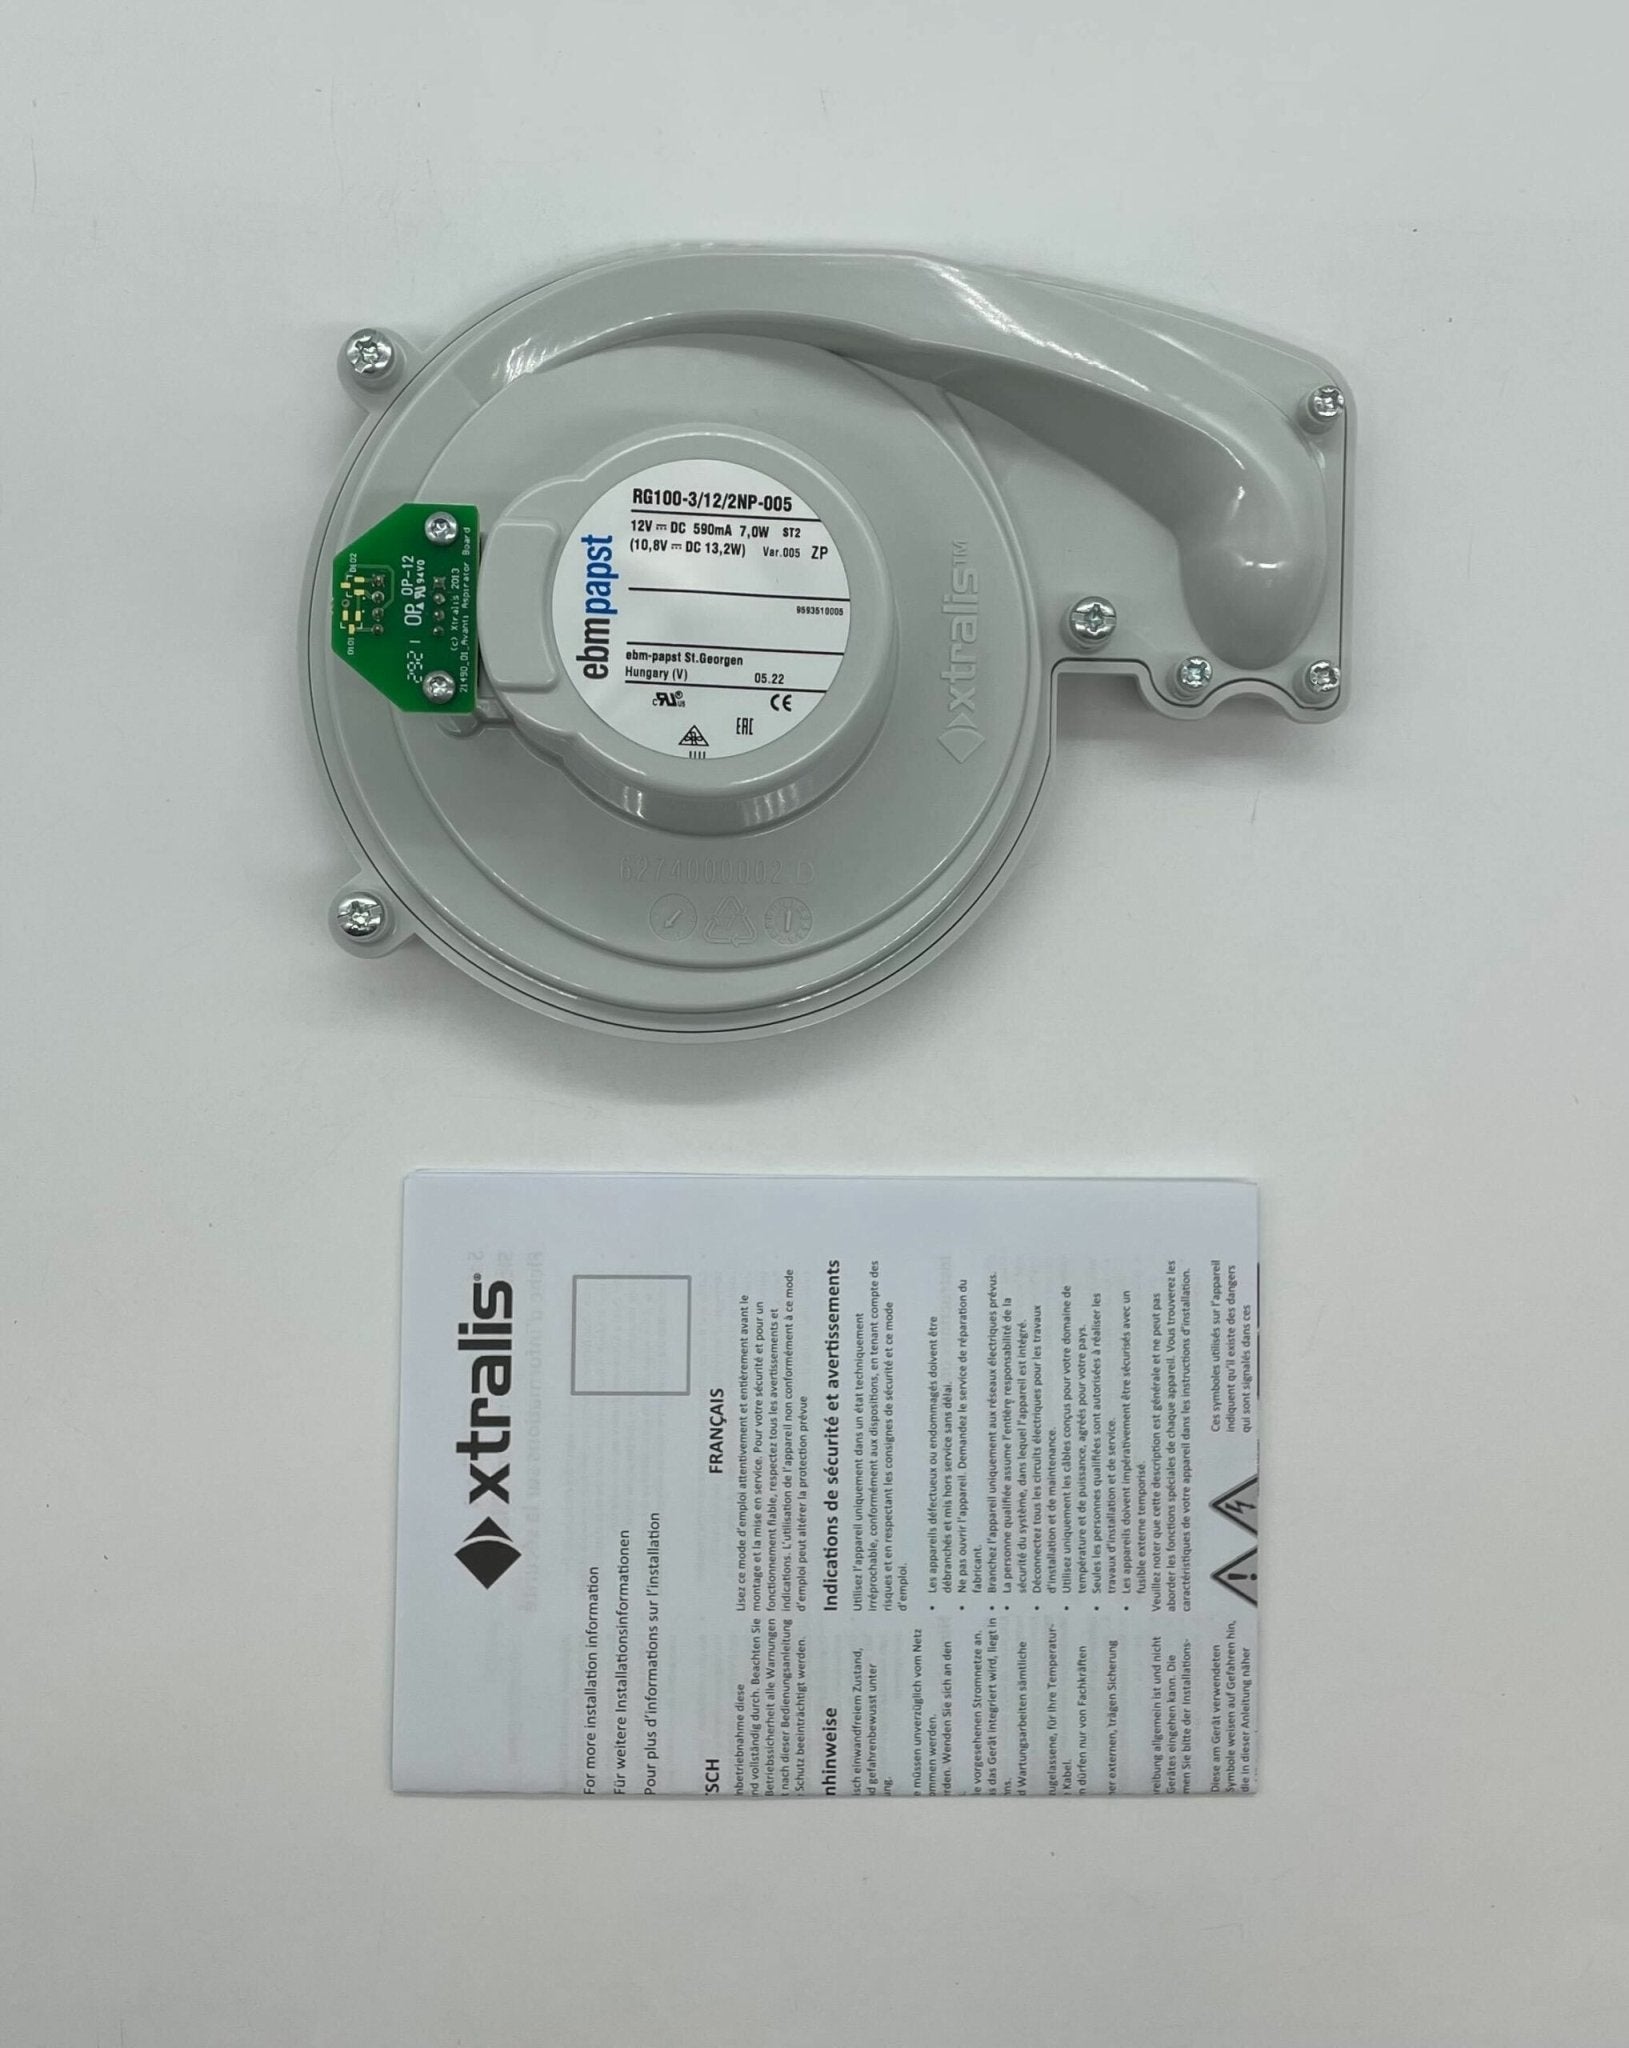 Vesda VSP-963 - The Fire Alarm Supplier